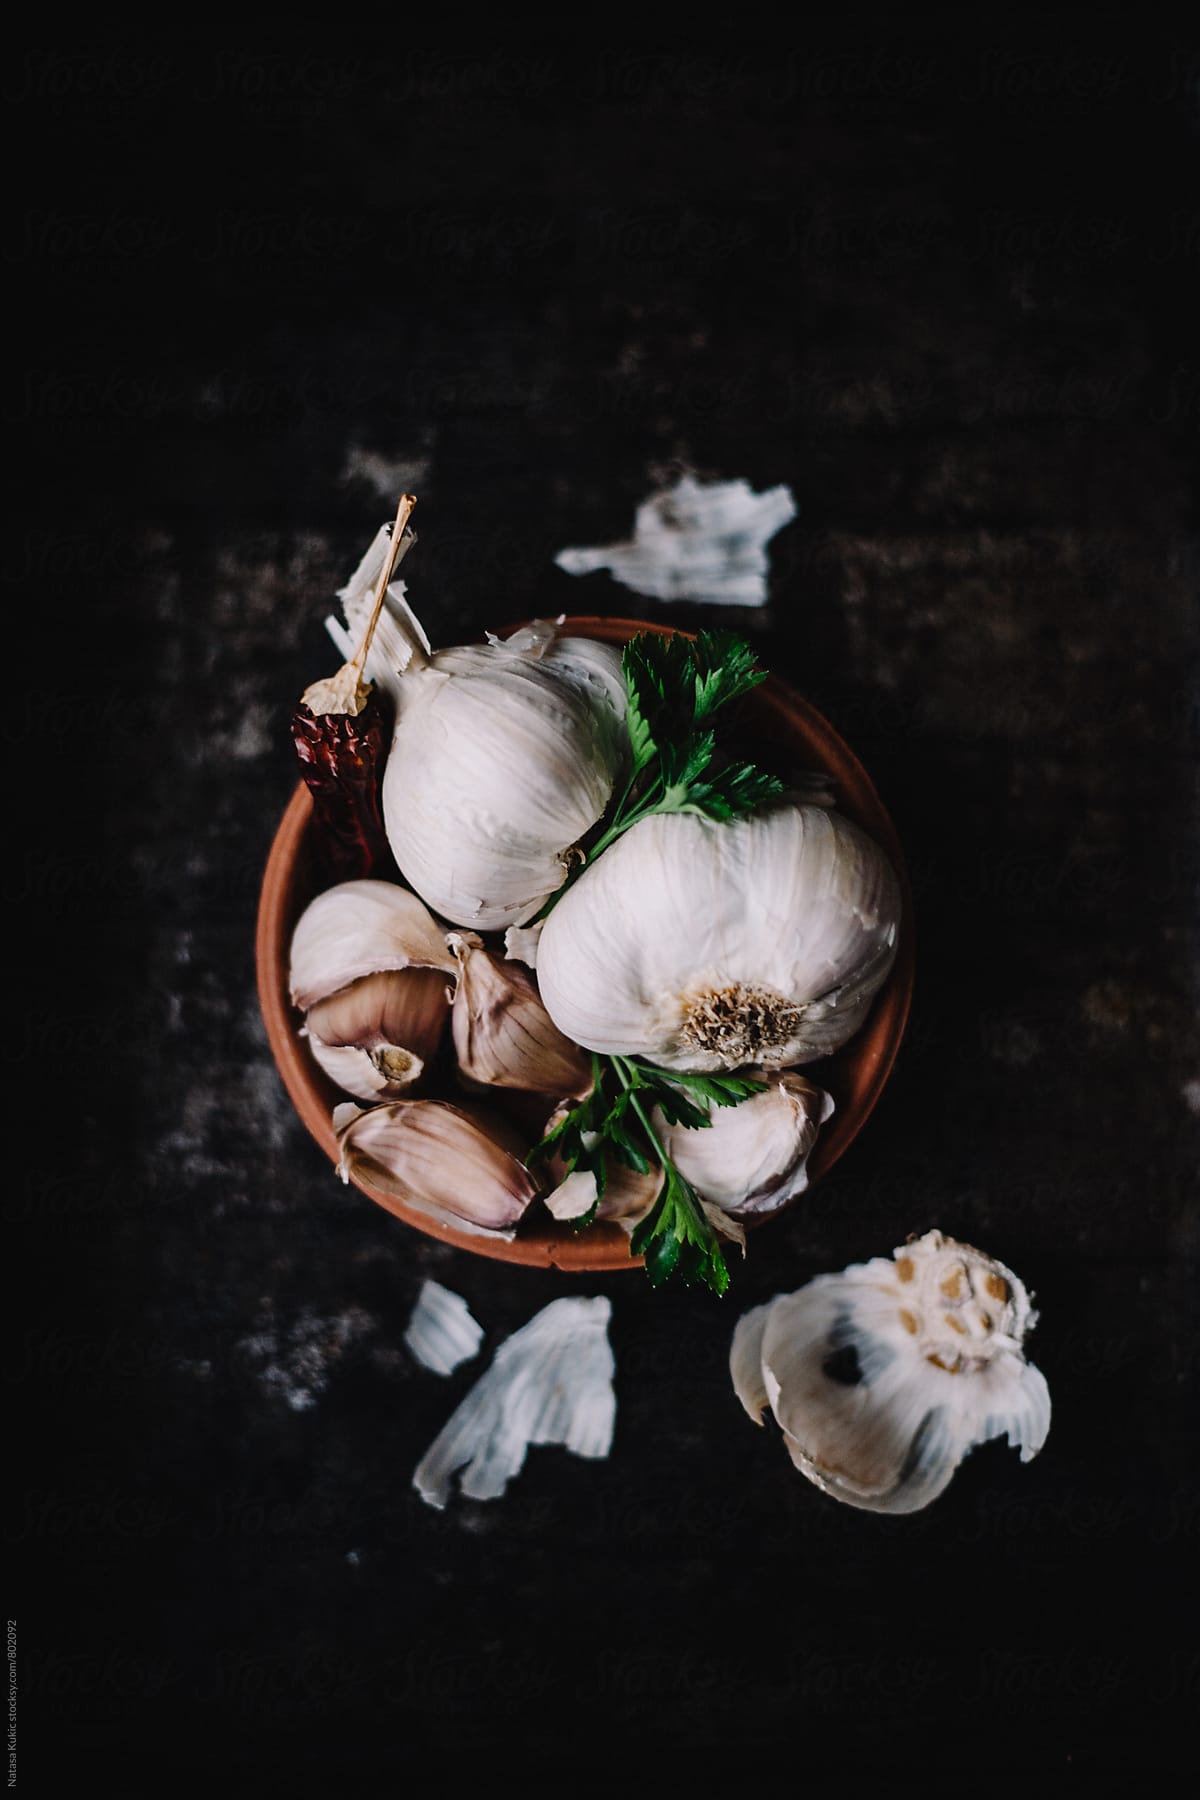 Garlic in many ways